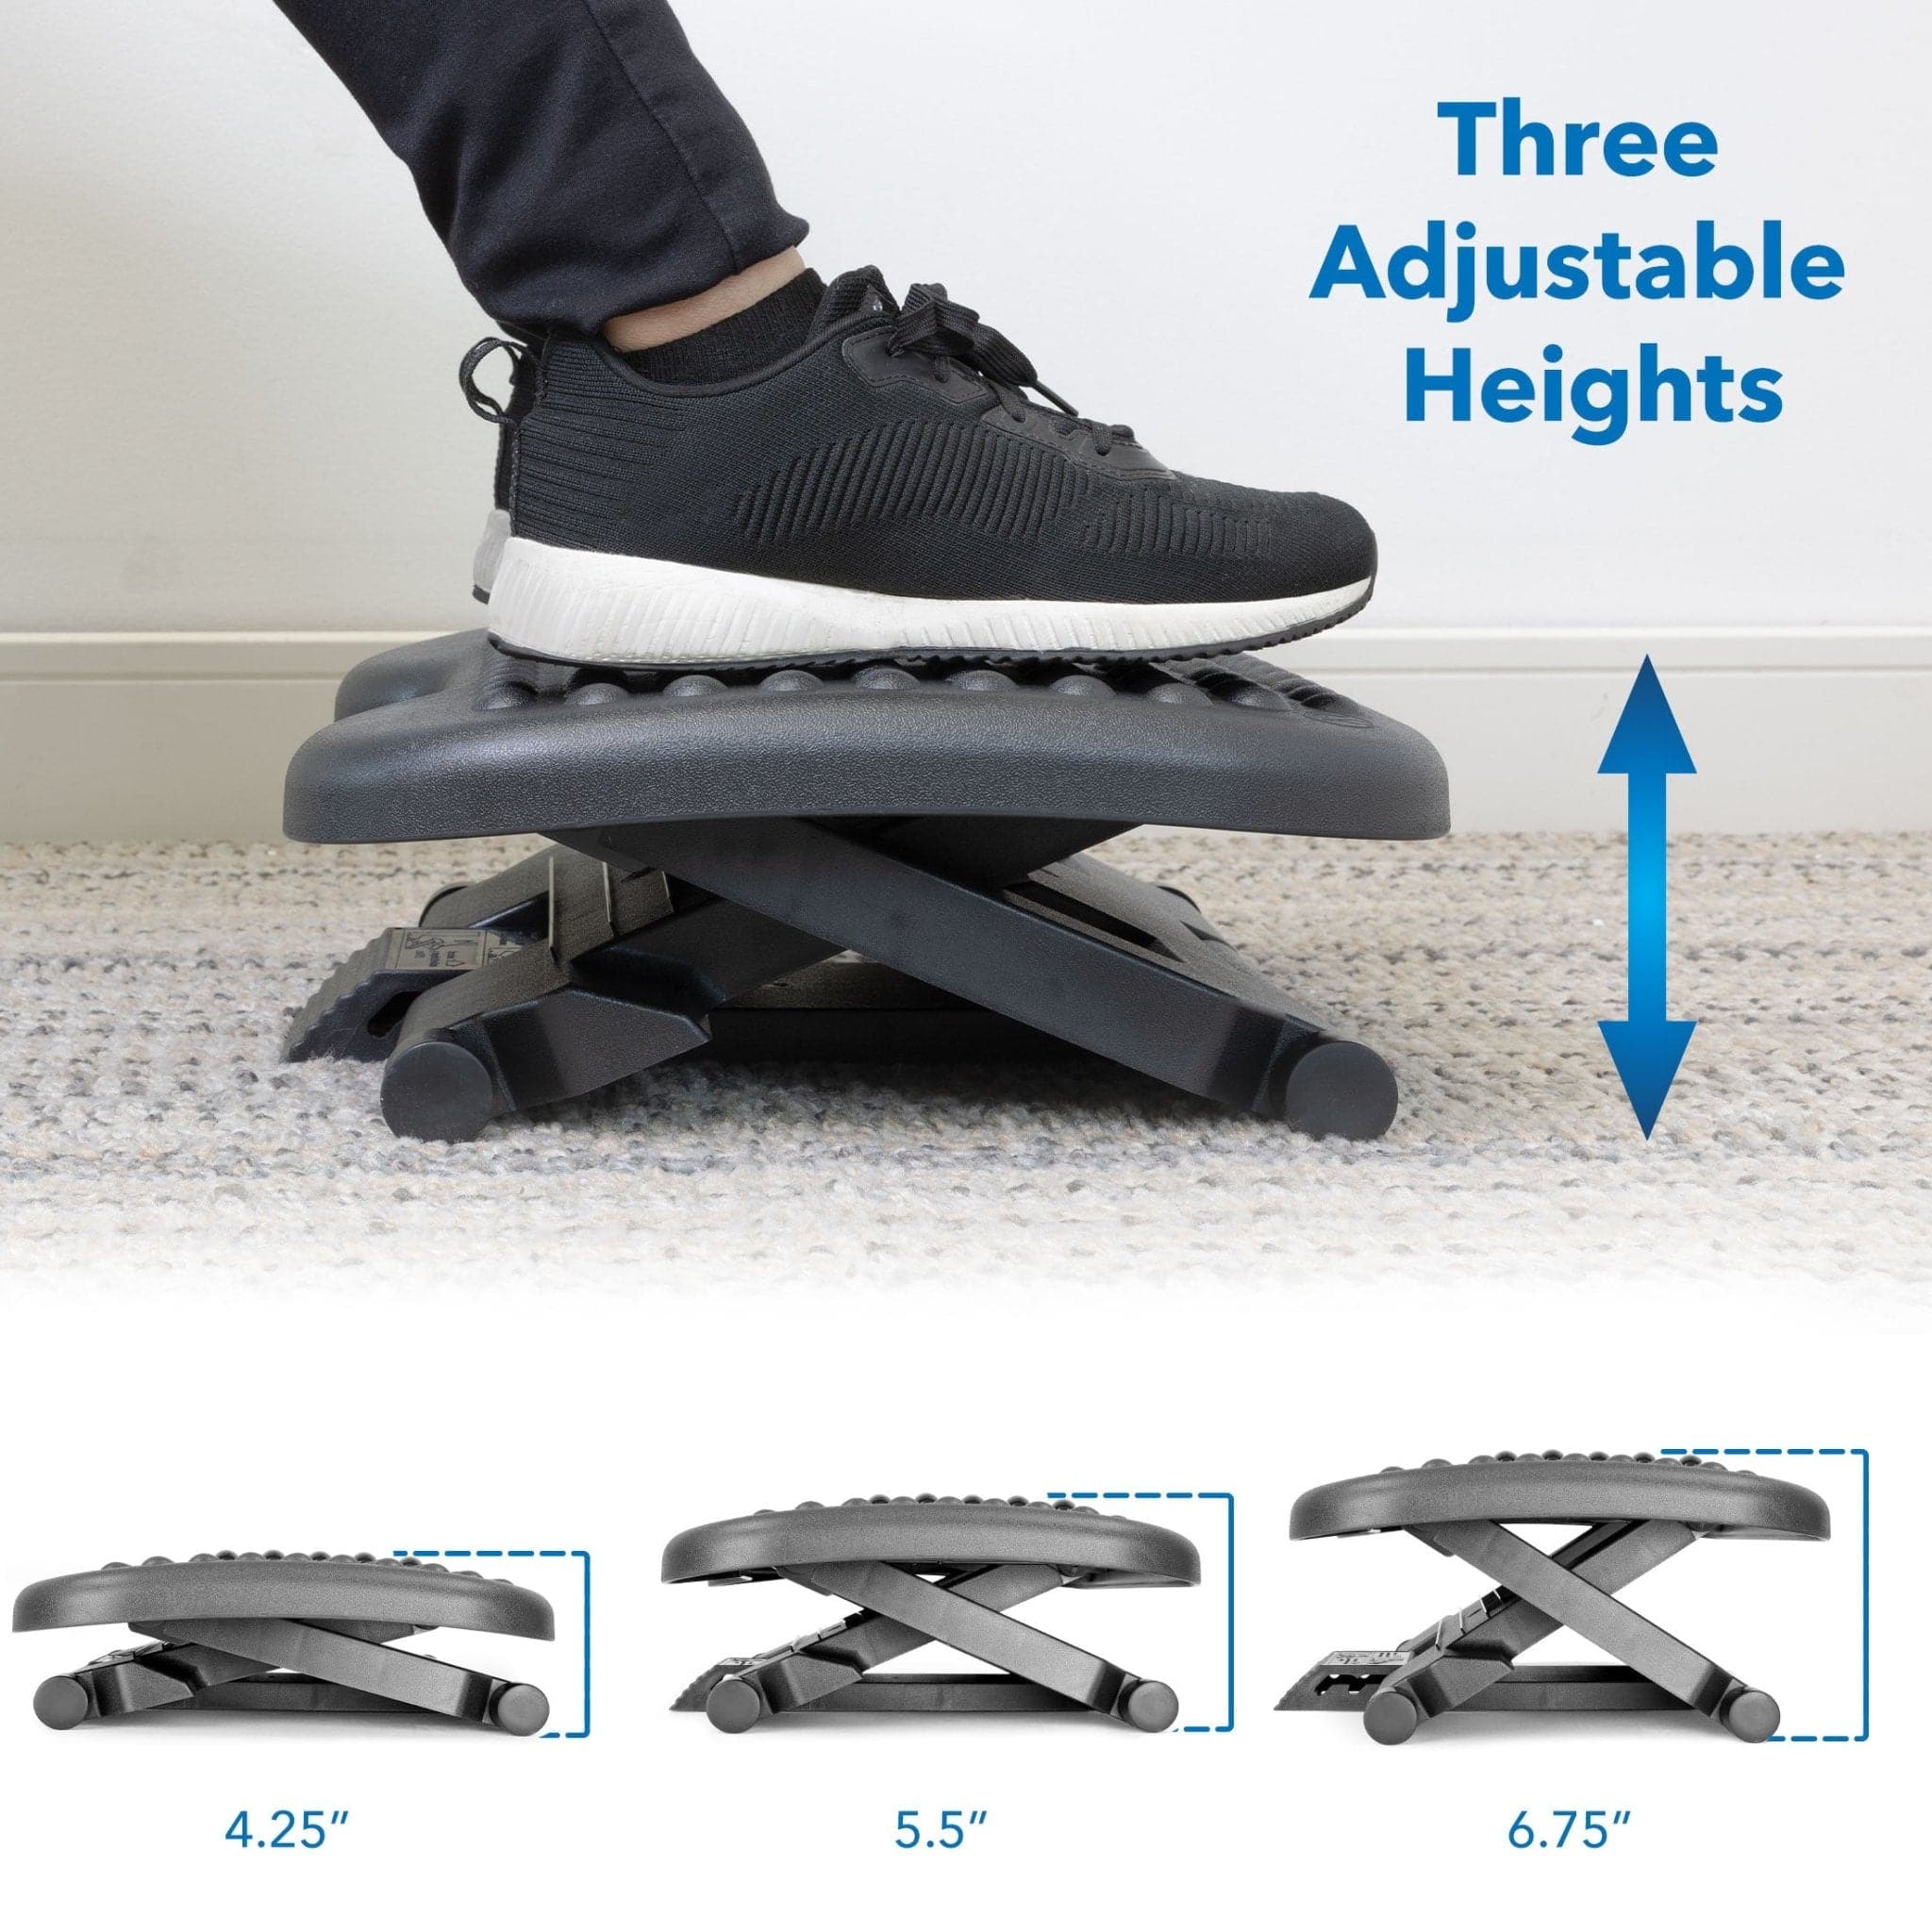 Adjustable Under Desk Footrest - Ergonomic Foot Rest with 3 Height Position